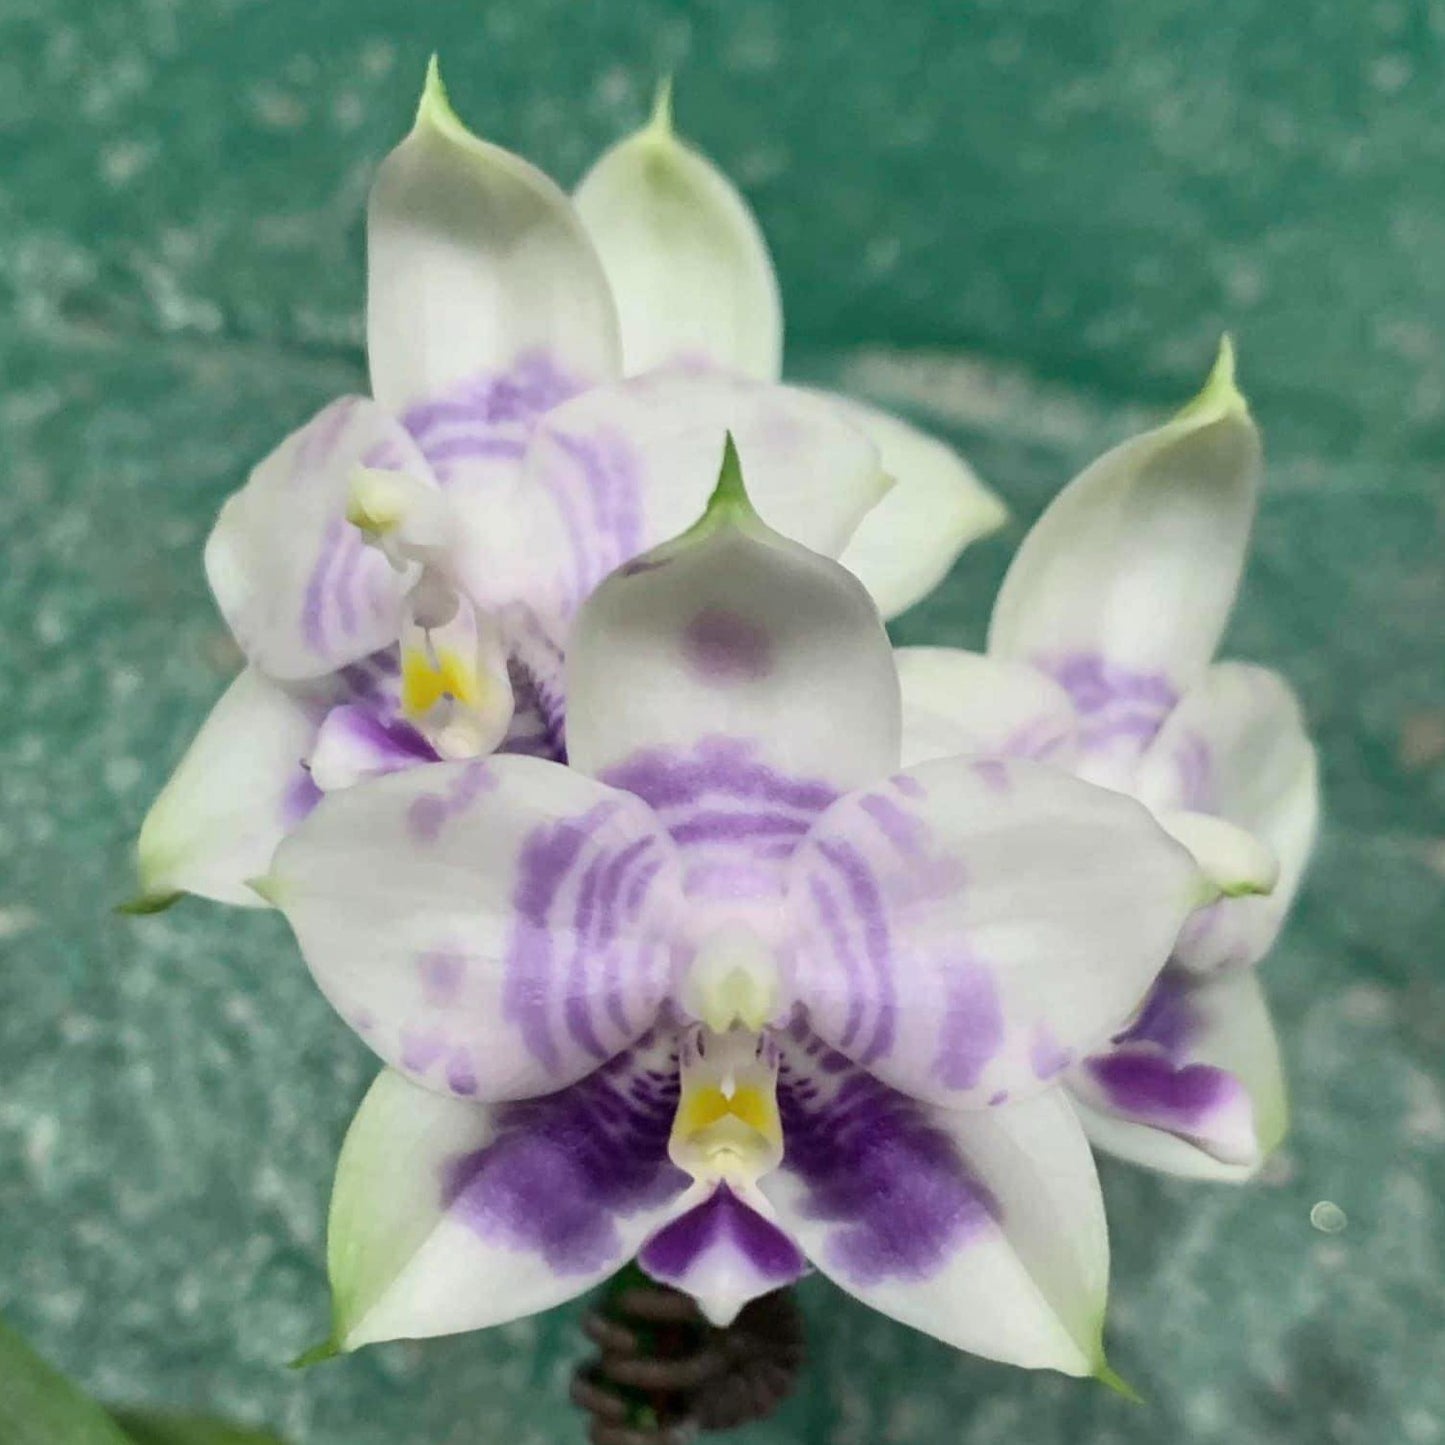 Phalaenopsis Mituo Purple Dragon 'Blue White' 240624 Budding